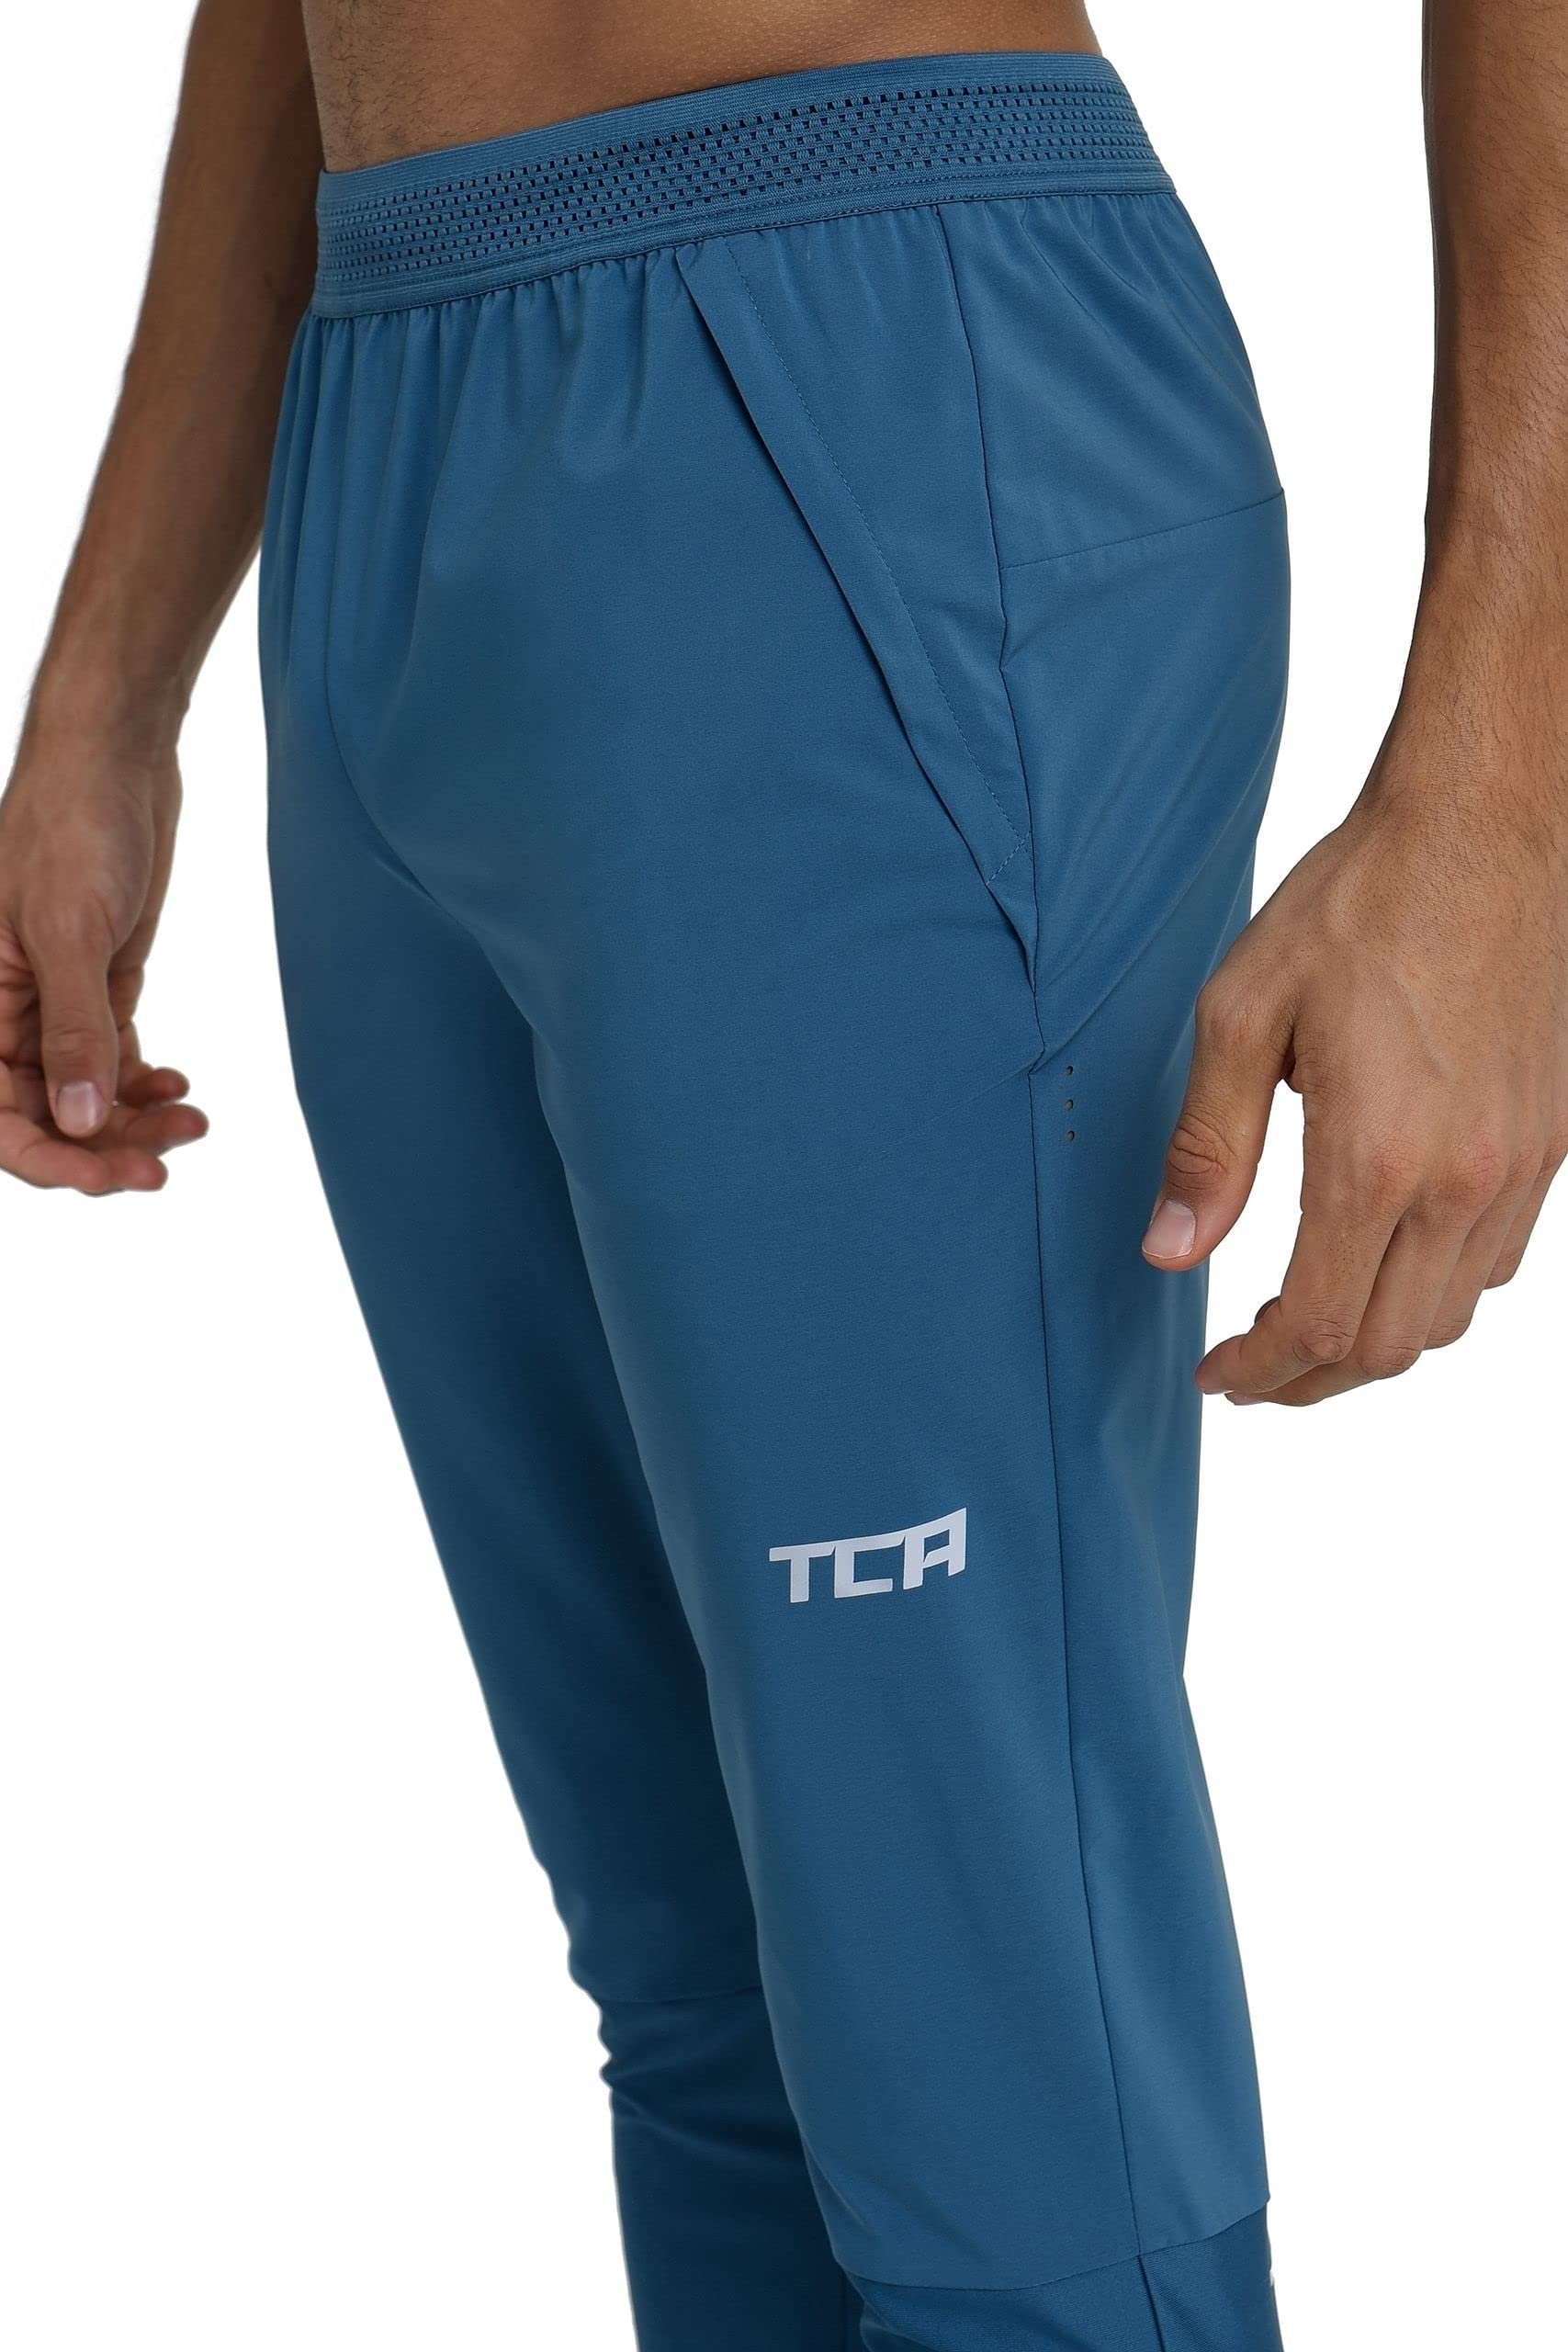 - TCA Reißverschlusstaschen Herren mit Laufhose TCA XL Blau, Jogginghose